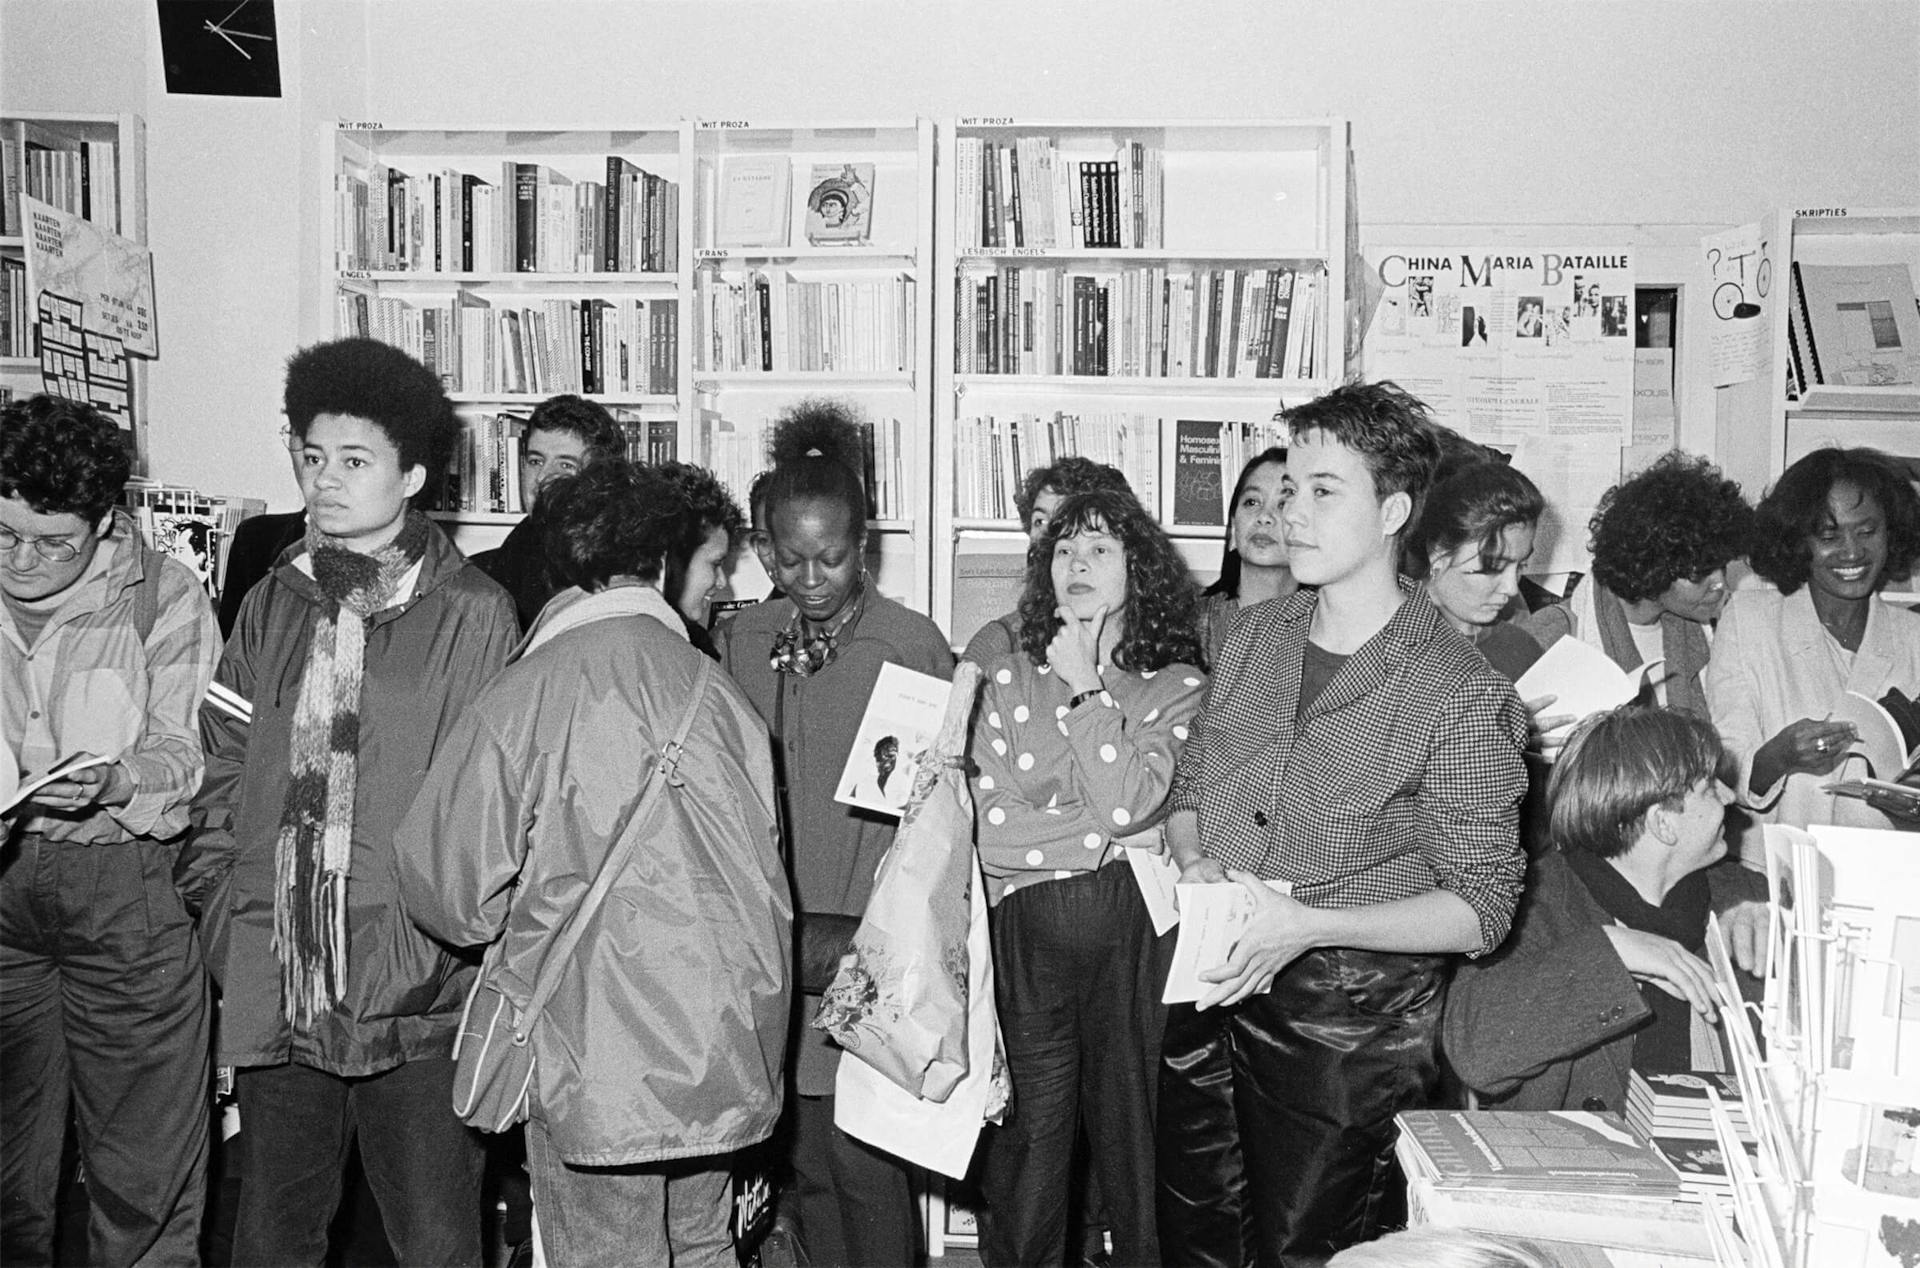 Book presentation of "Zwart aan zet" [Black Moves] by Grace Stulting during the Vrouwenboekenweek [Women’s Book Week], at the Vrouwenboekhandel De Feeks [Women’s Bookstore De Feeks], Nijmegen, 1985, photo: An Stalpers. Source: Fotografica… 